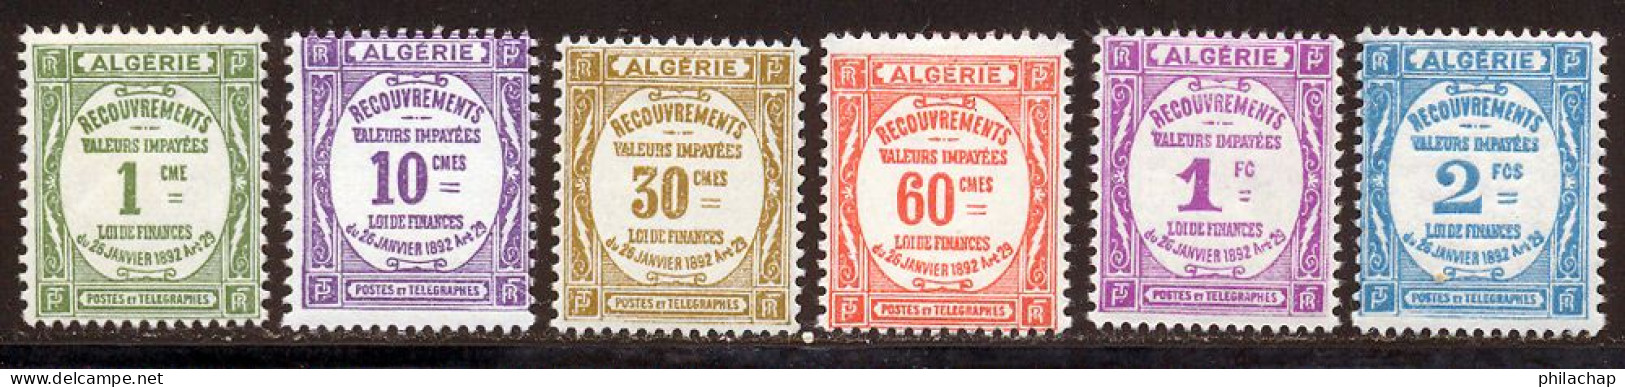 Algerie Taxe 1926 Yvert 15 / 20 * TB Charniere(s) - Portomarken